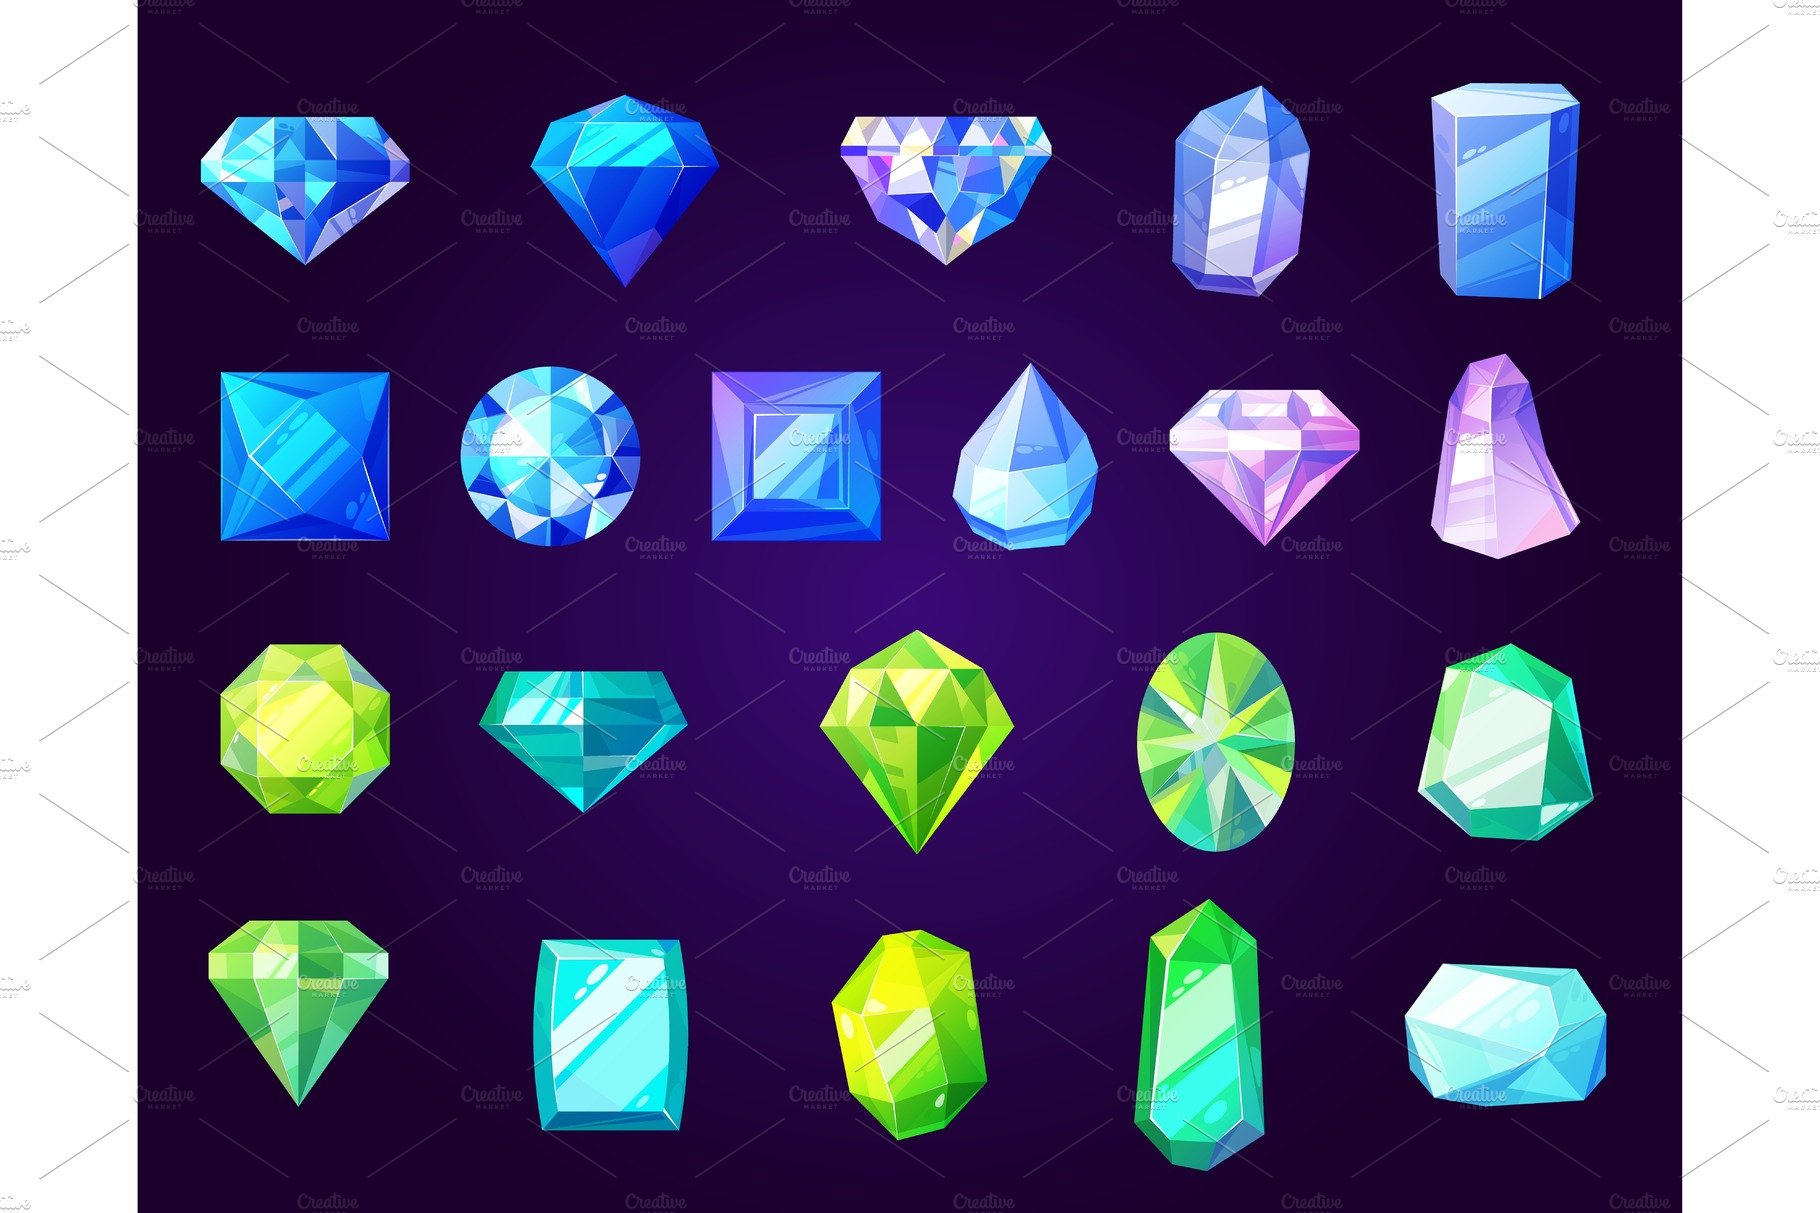 Sapphires, emeralds, precious stones cover image.